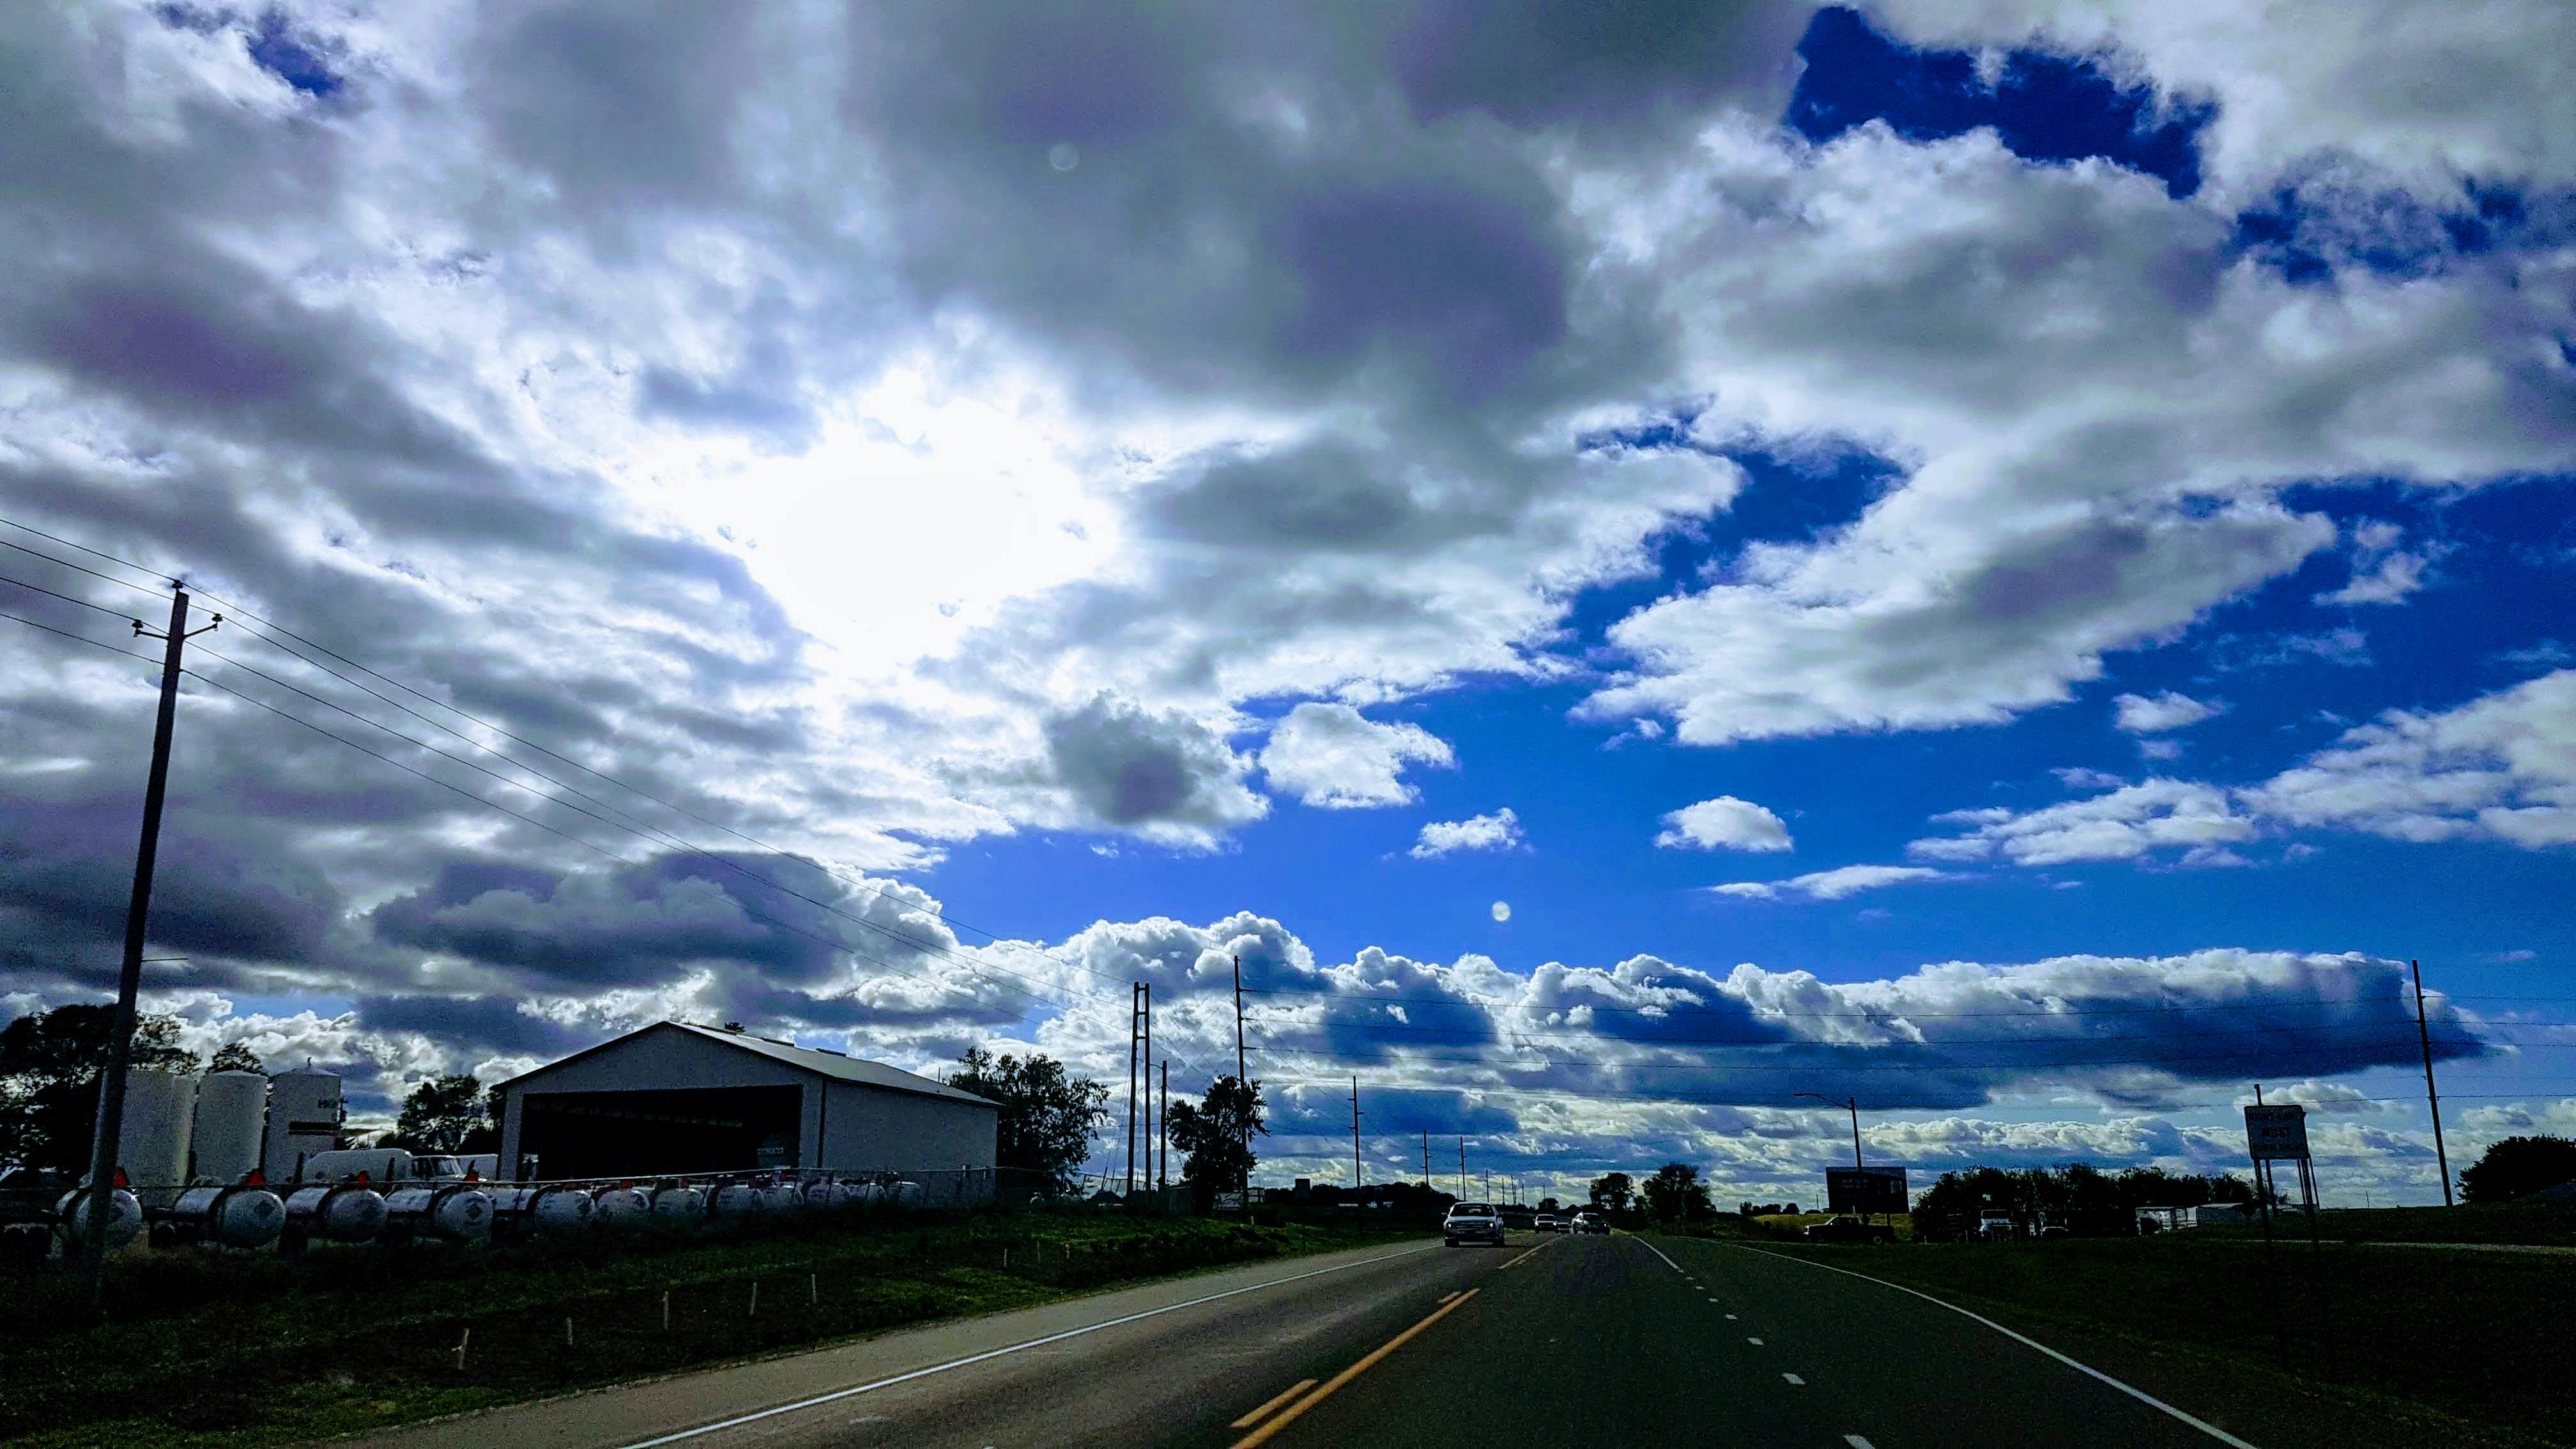 Free stock photo of #nature #sky #clouds #storm #sun #farm